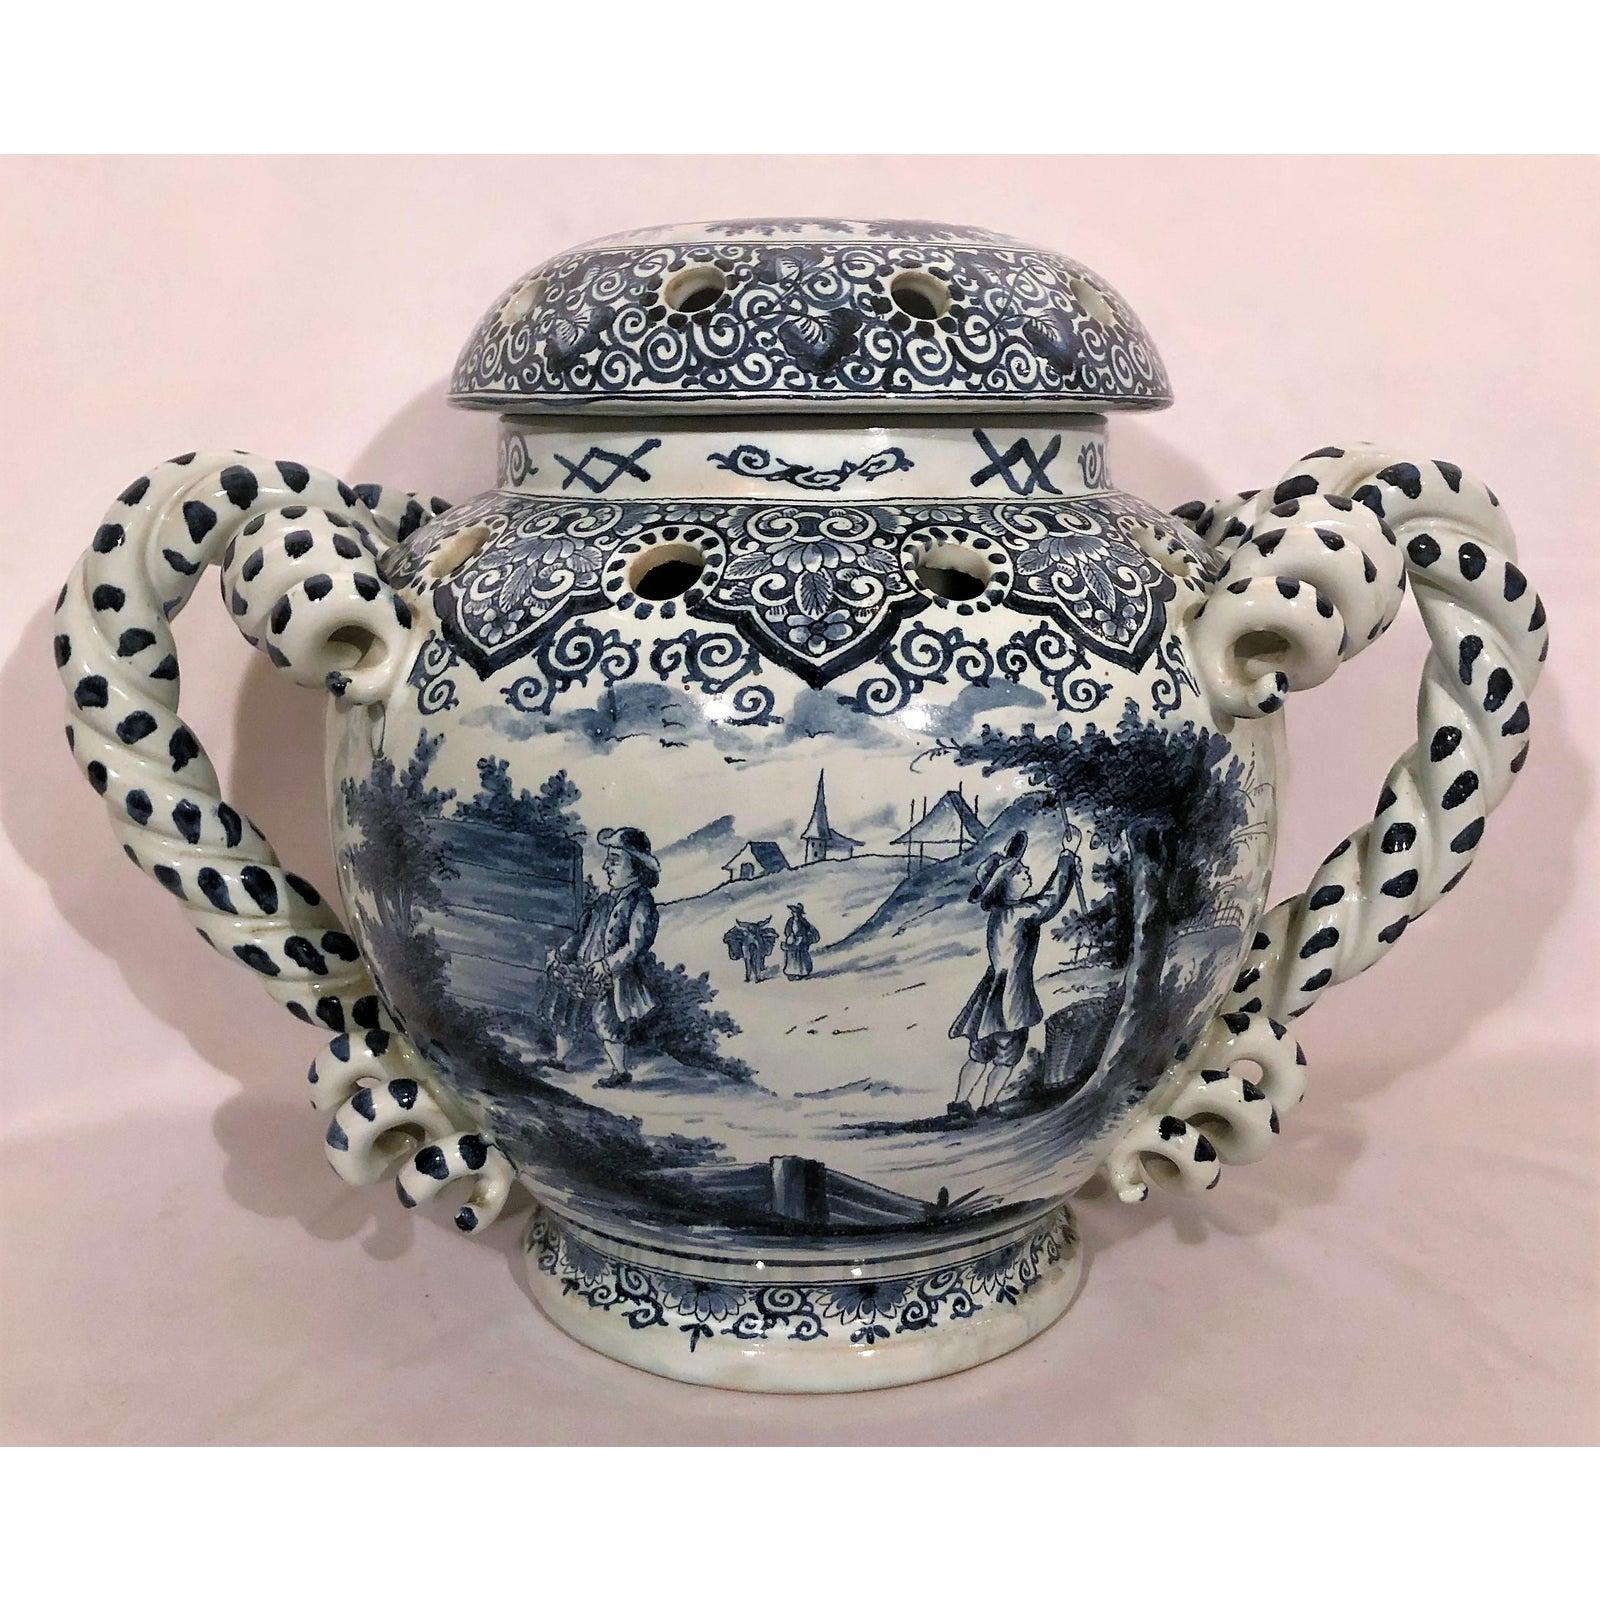 Antique 19th century Dutch delft porcelain Tulipiere urn, circa 1840.
URN087.